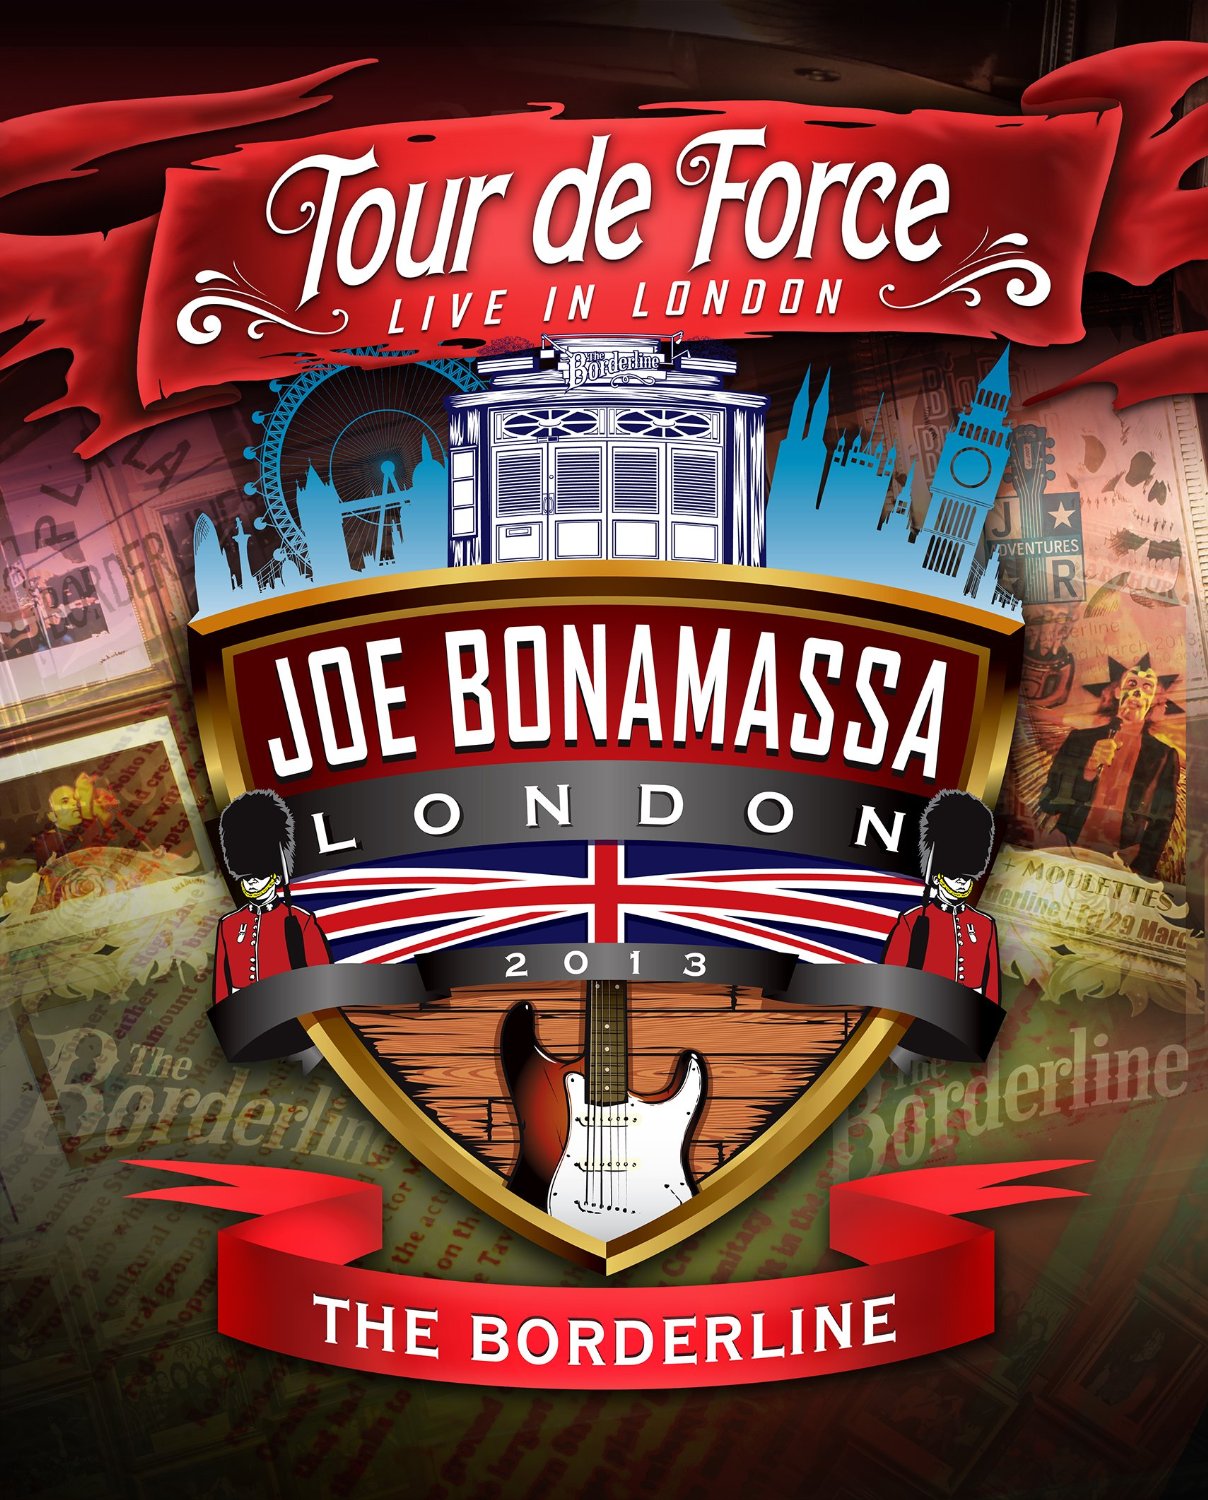 Joe Bonamassa - Live in London Borderline DVD - Bob Held Writer